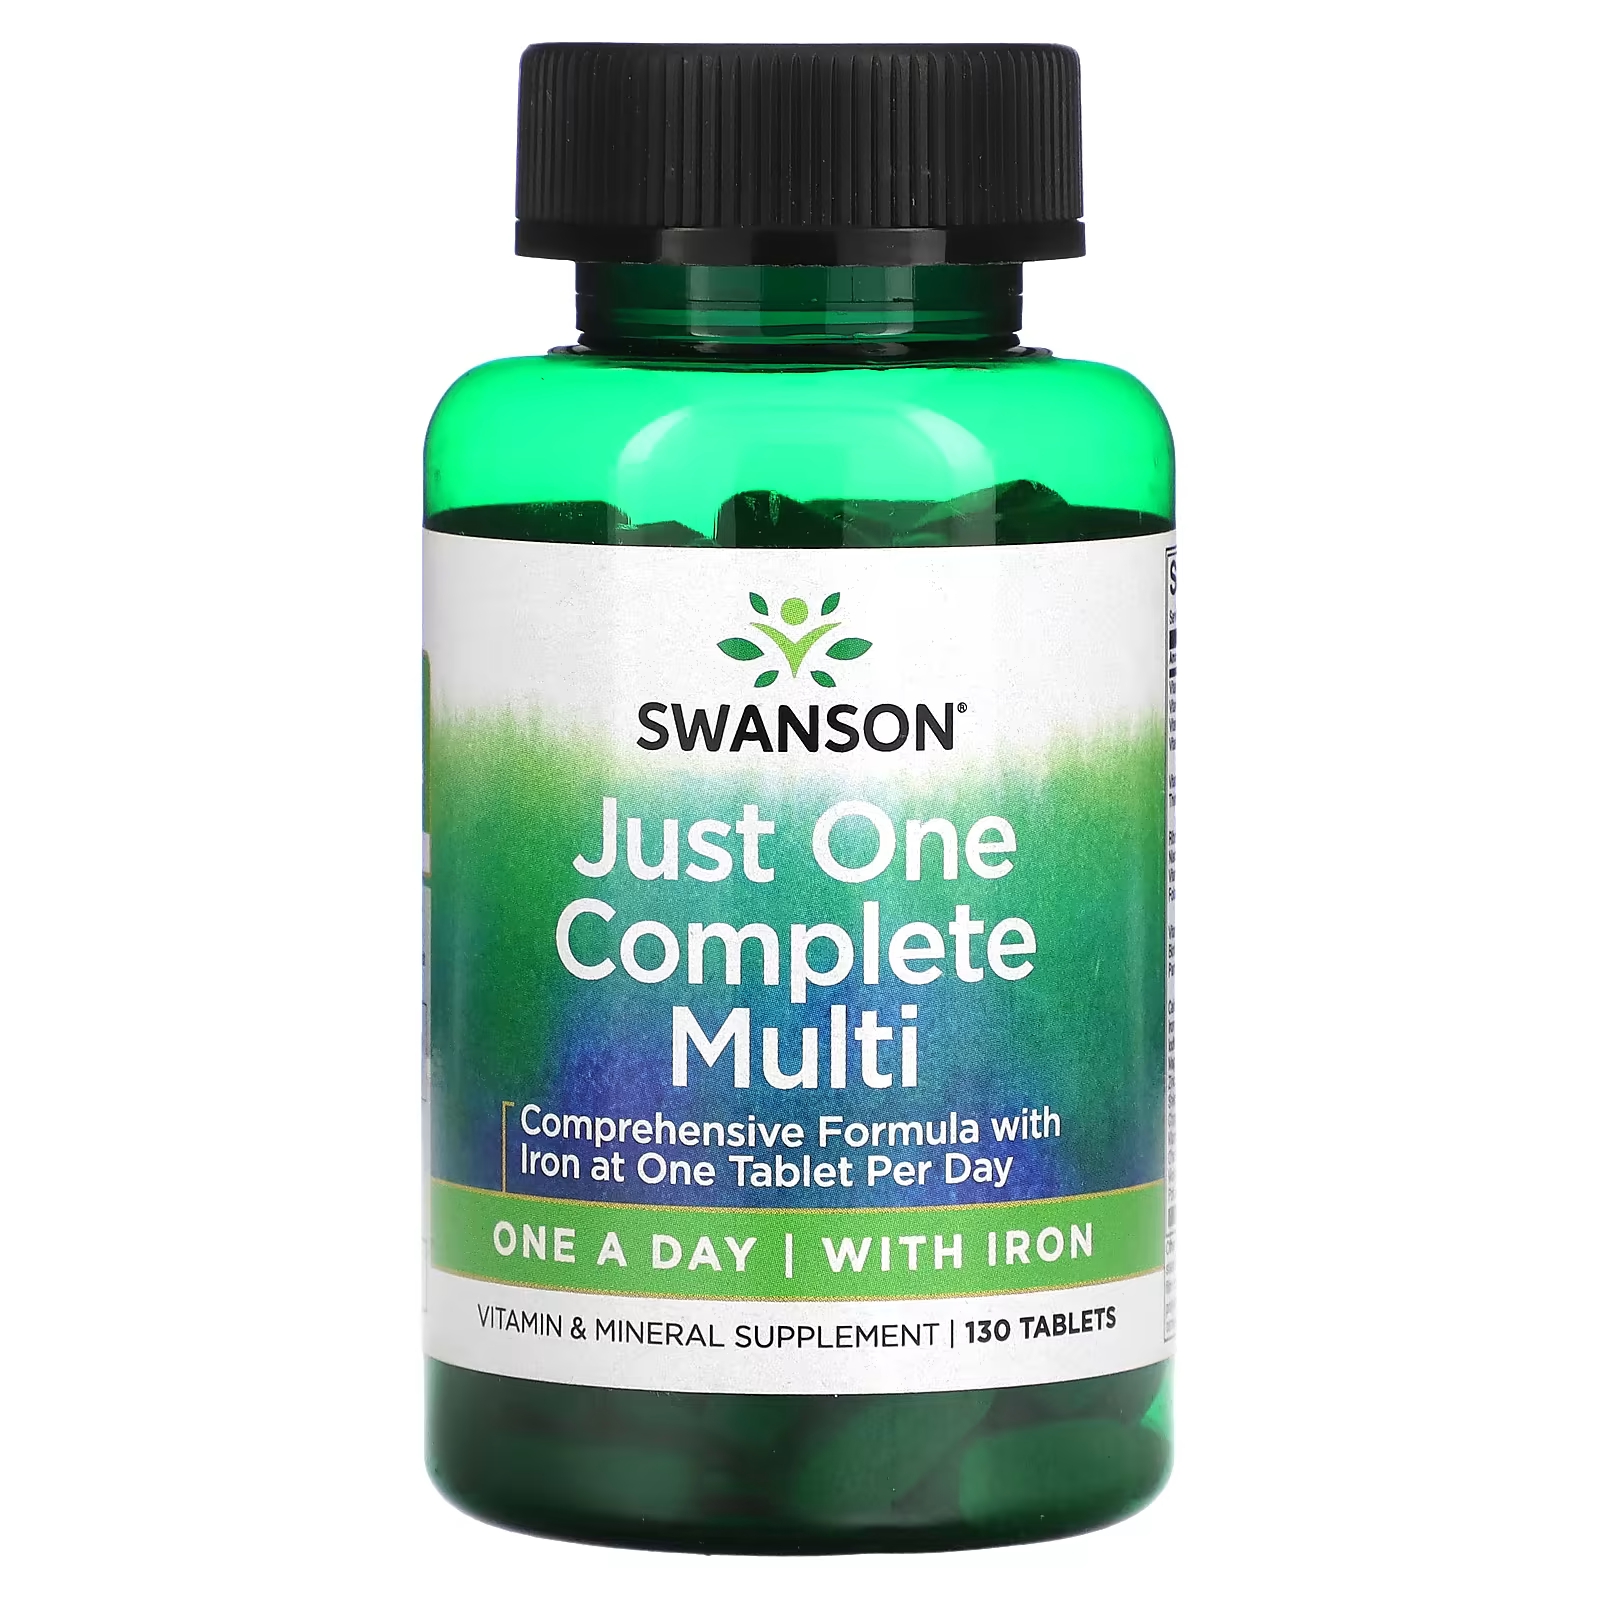 Мультивитамины Swanson Just One Complete Multi с железом swanson ежедневный незаменимый мультивитамин с железом 250 капсул